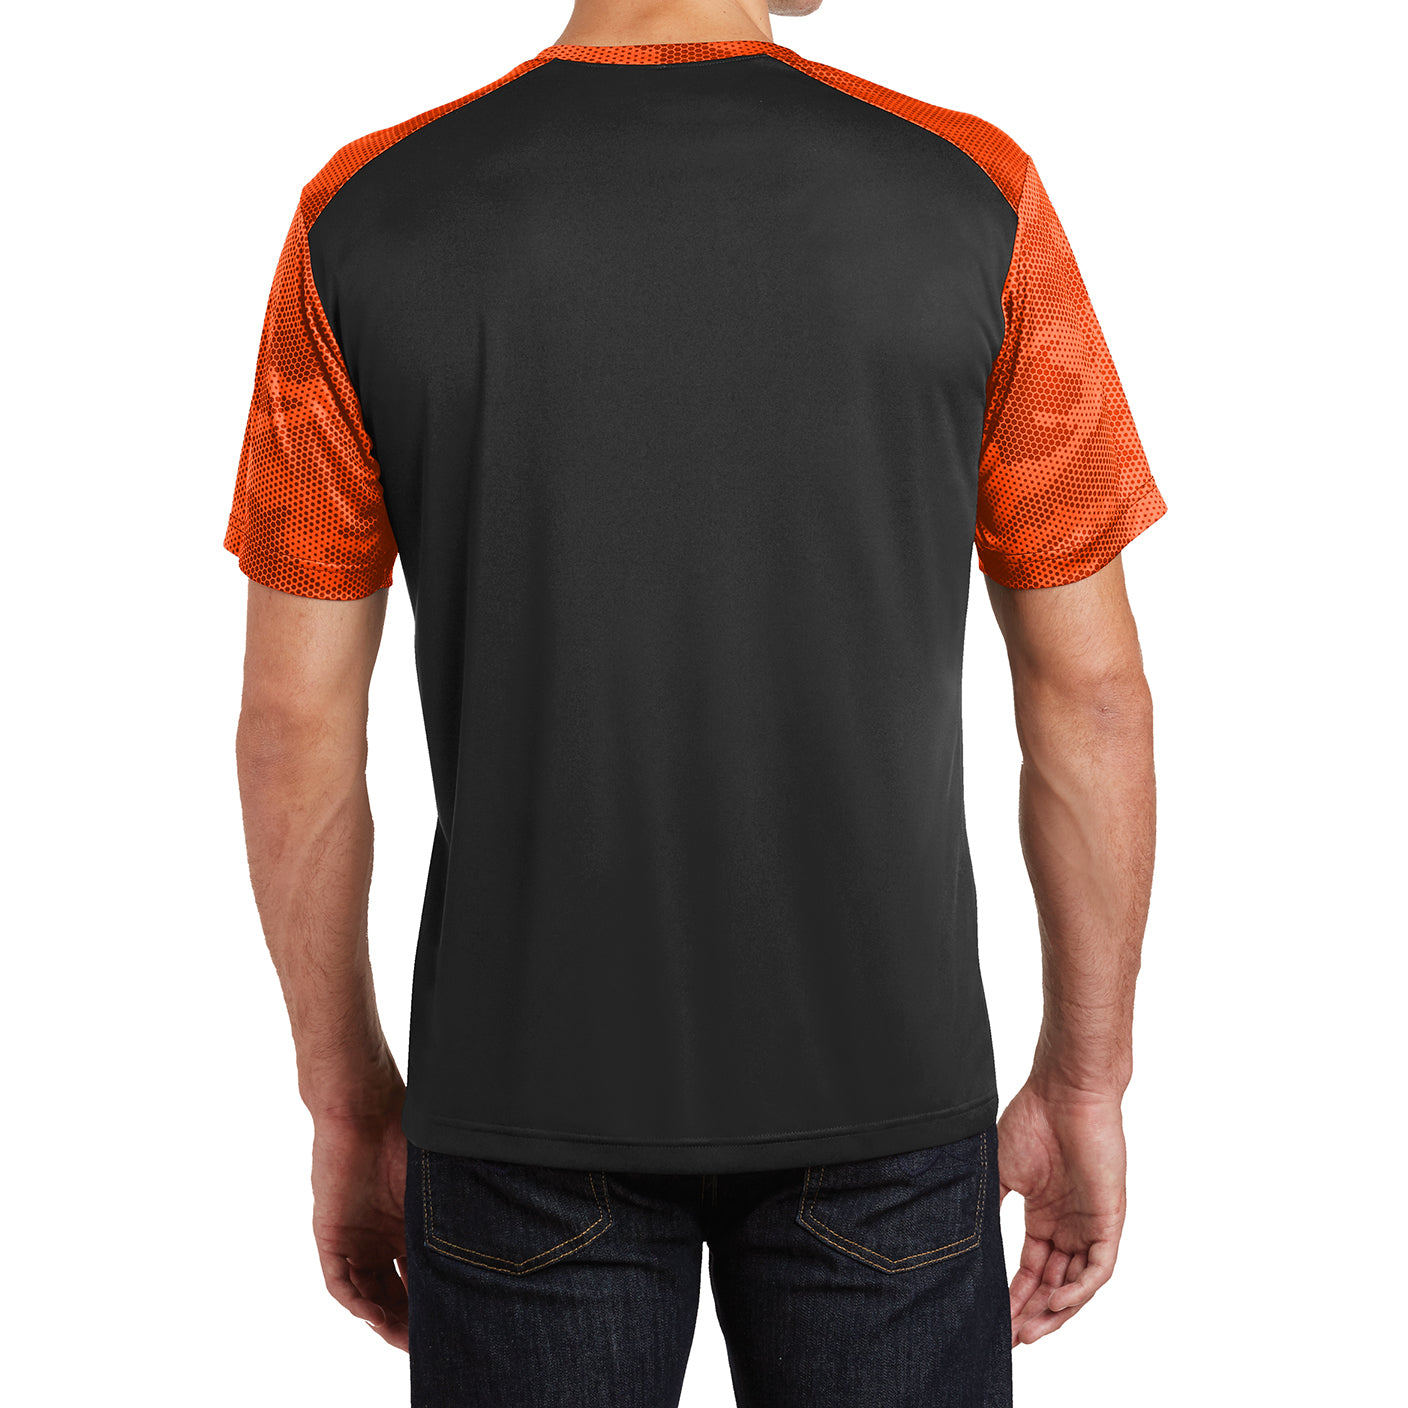 Men's CamoHex Colorblock Tee Shirt Black/ Neon Orange Back